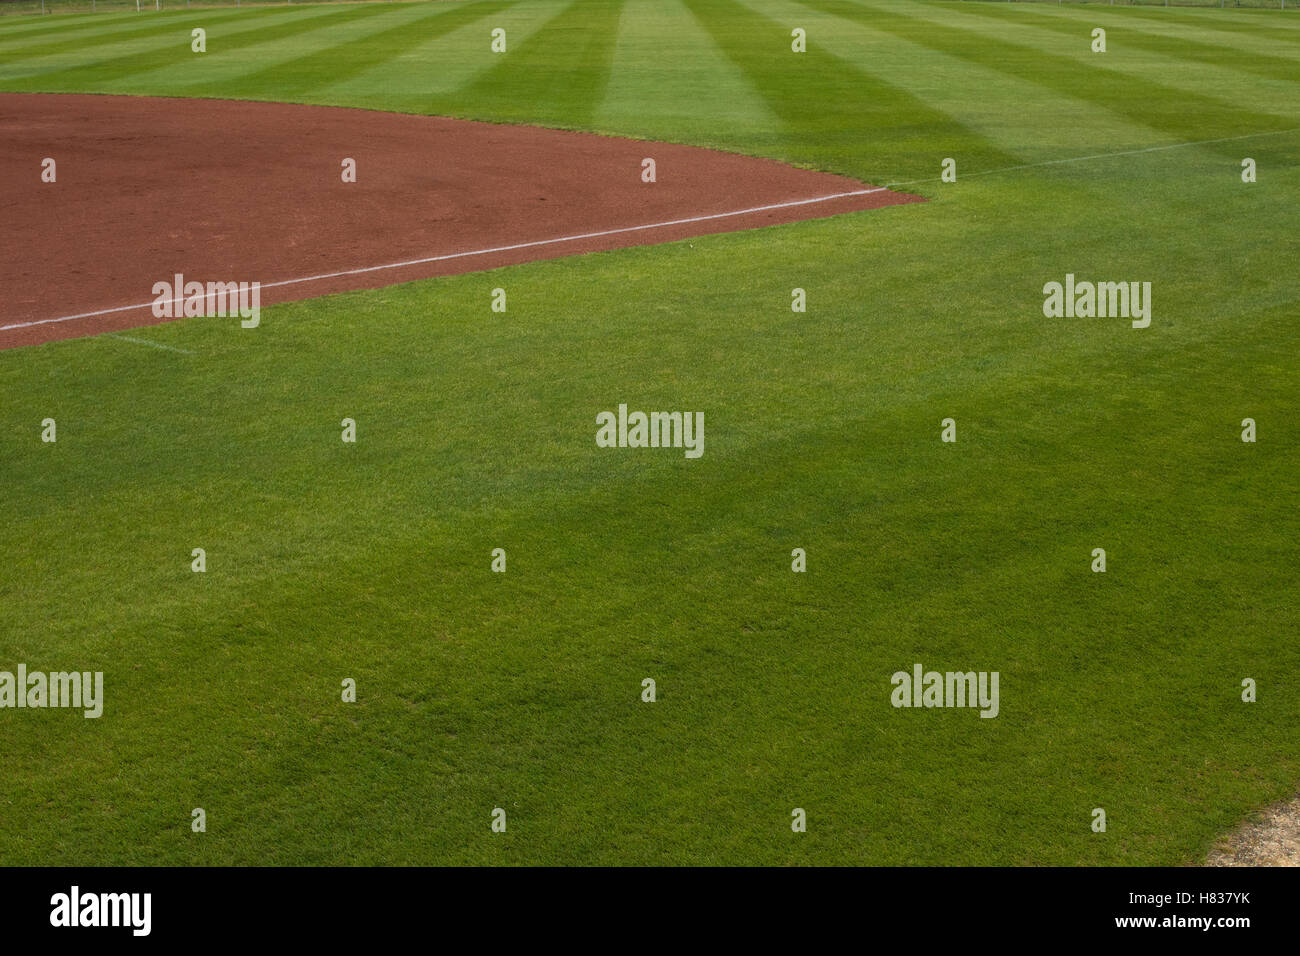 Baseball field Stock Photo